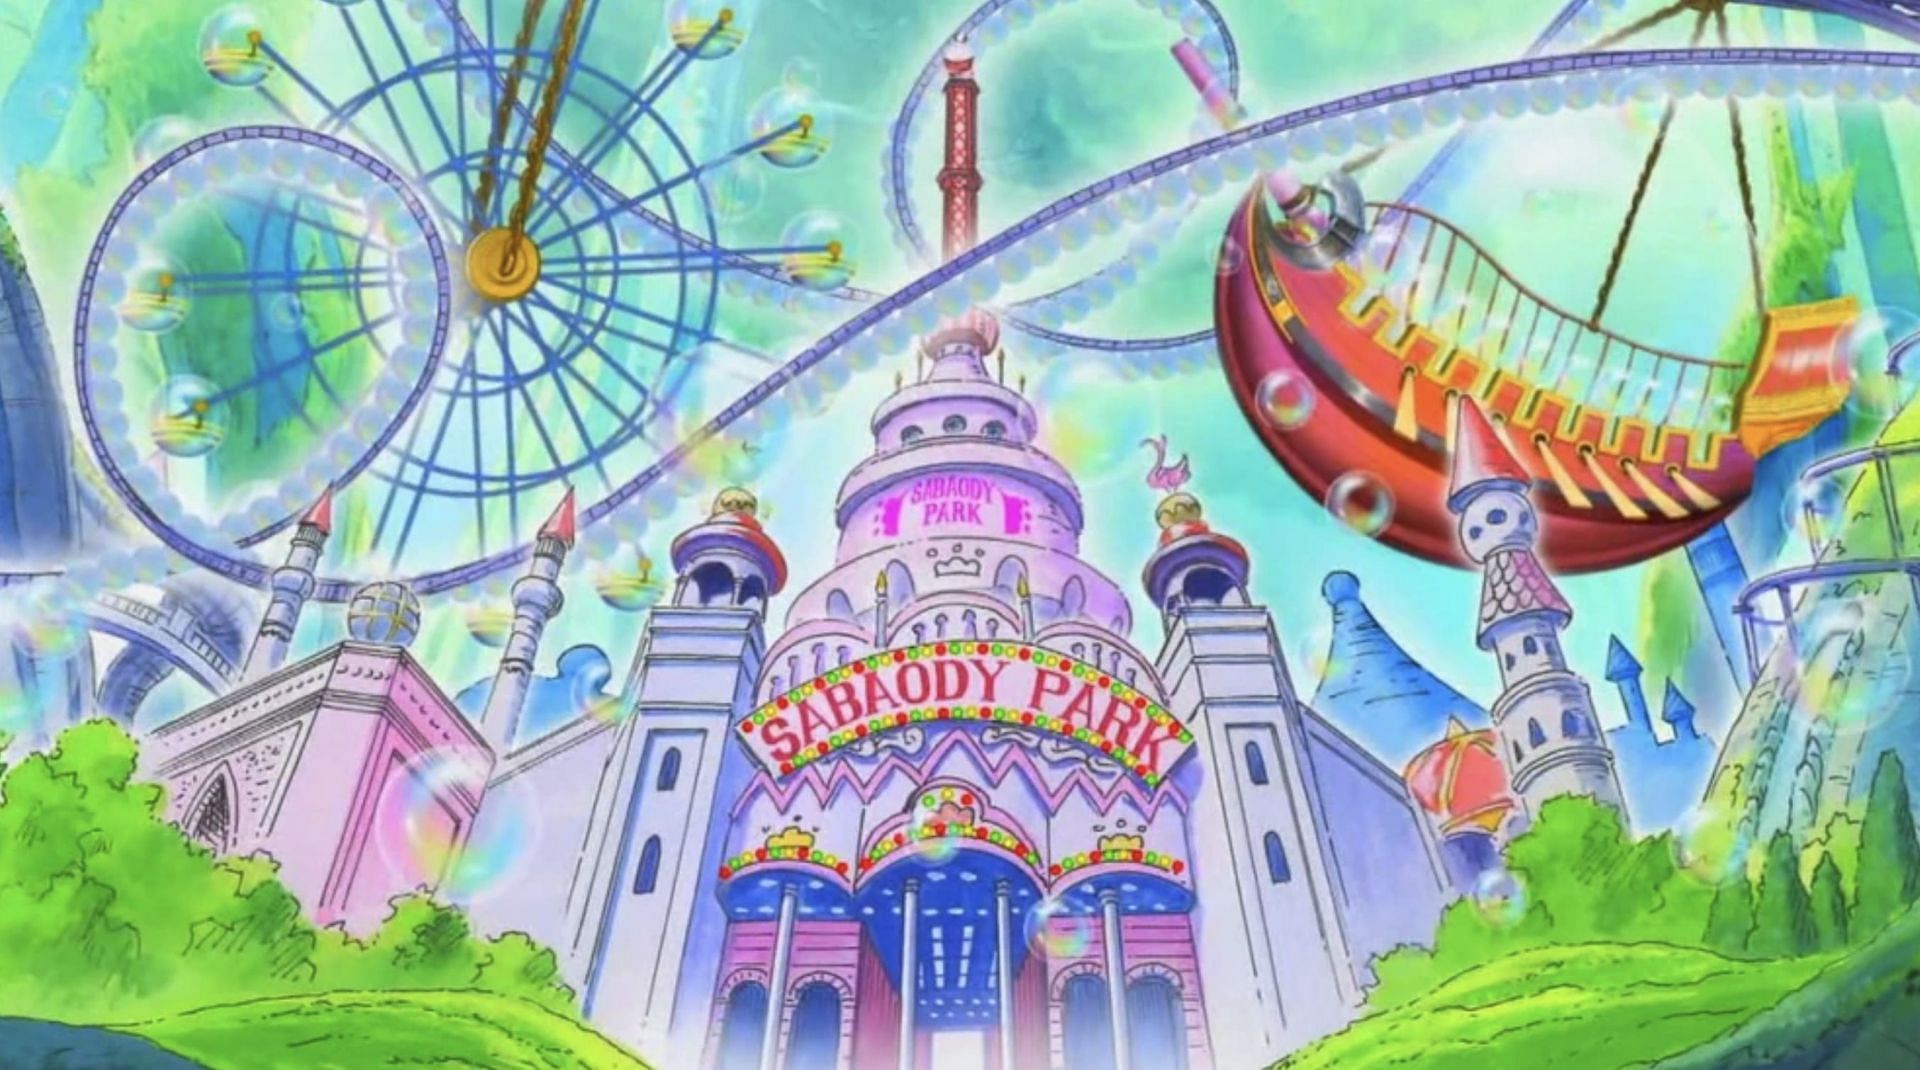 Sabaody Park as seen in anime (Image via Toei Animation)